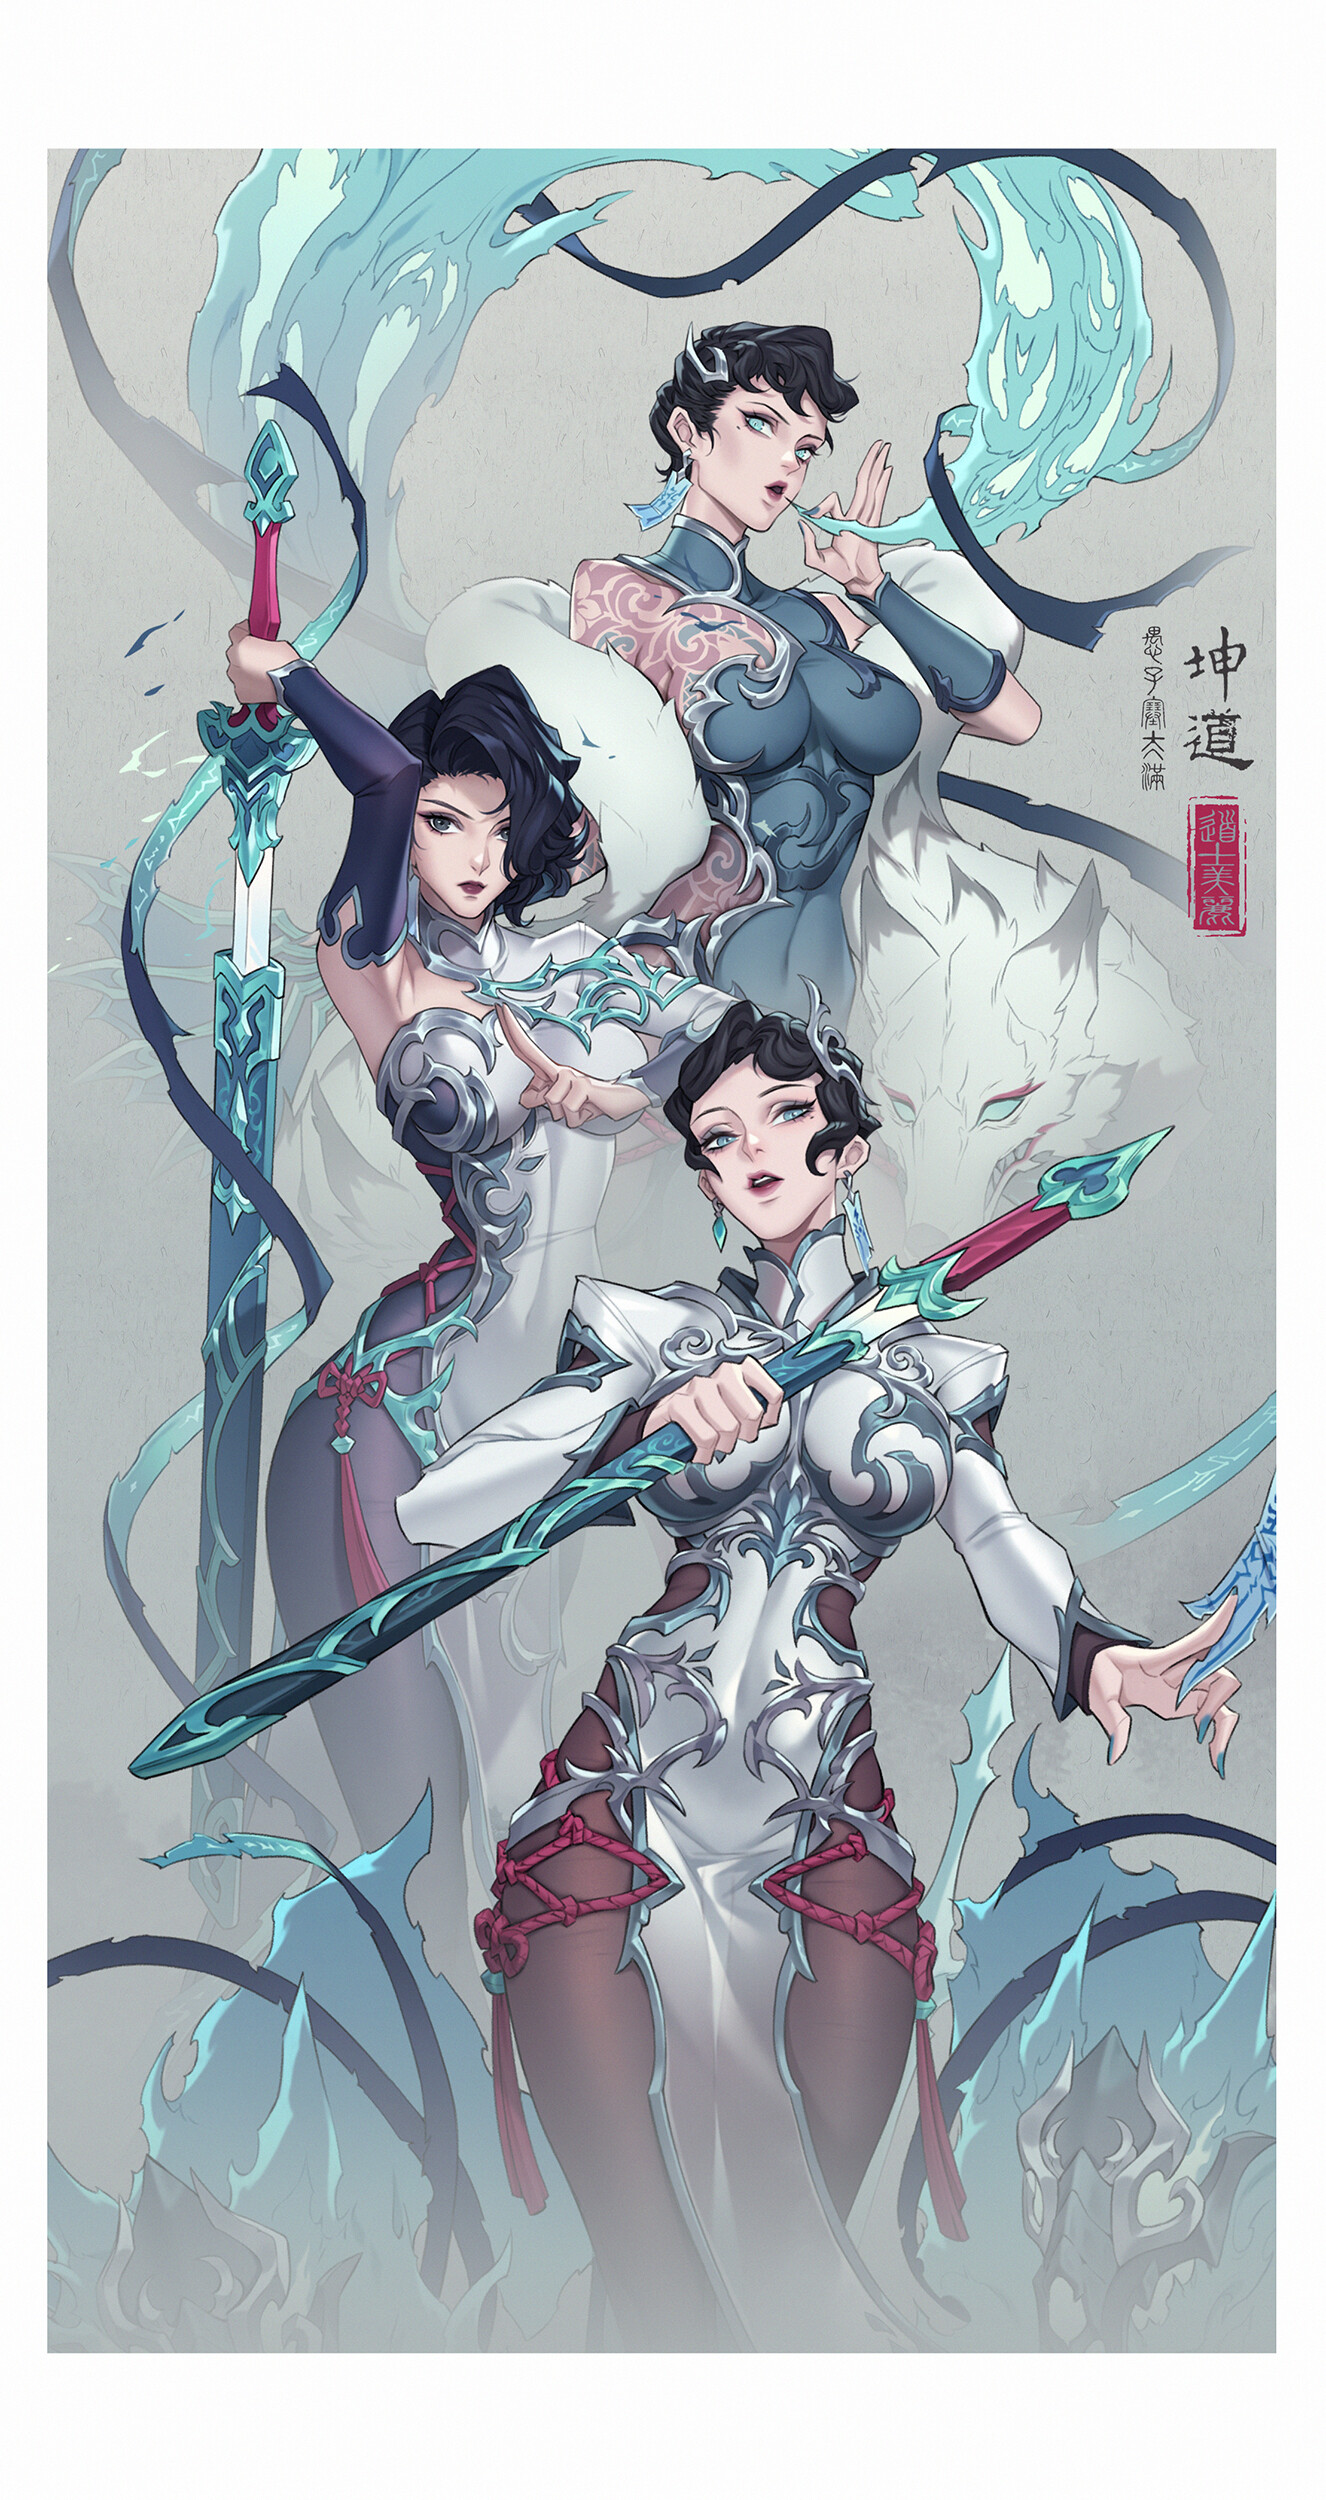 Citemer Liu Artwork Anime Anime Girls Women Women Trio Fantasy Art Fantasy Girl 1326x2500